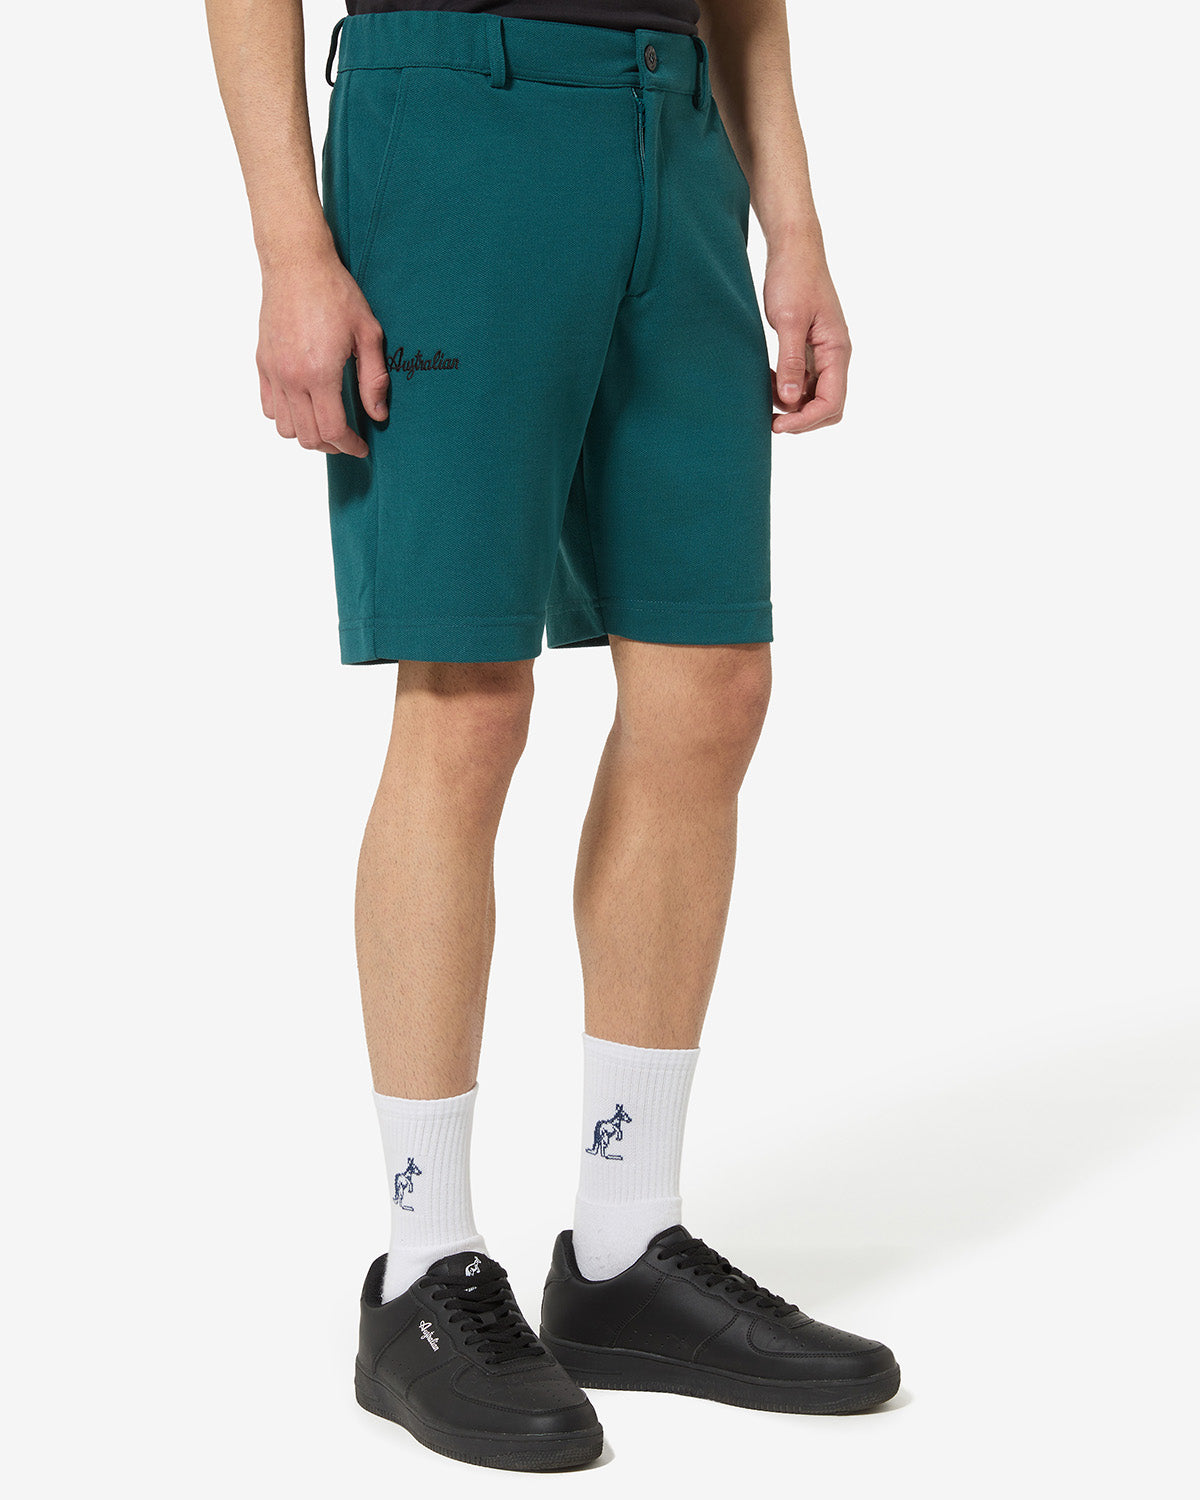 Club Shorts: Australian Sportswear